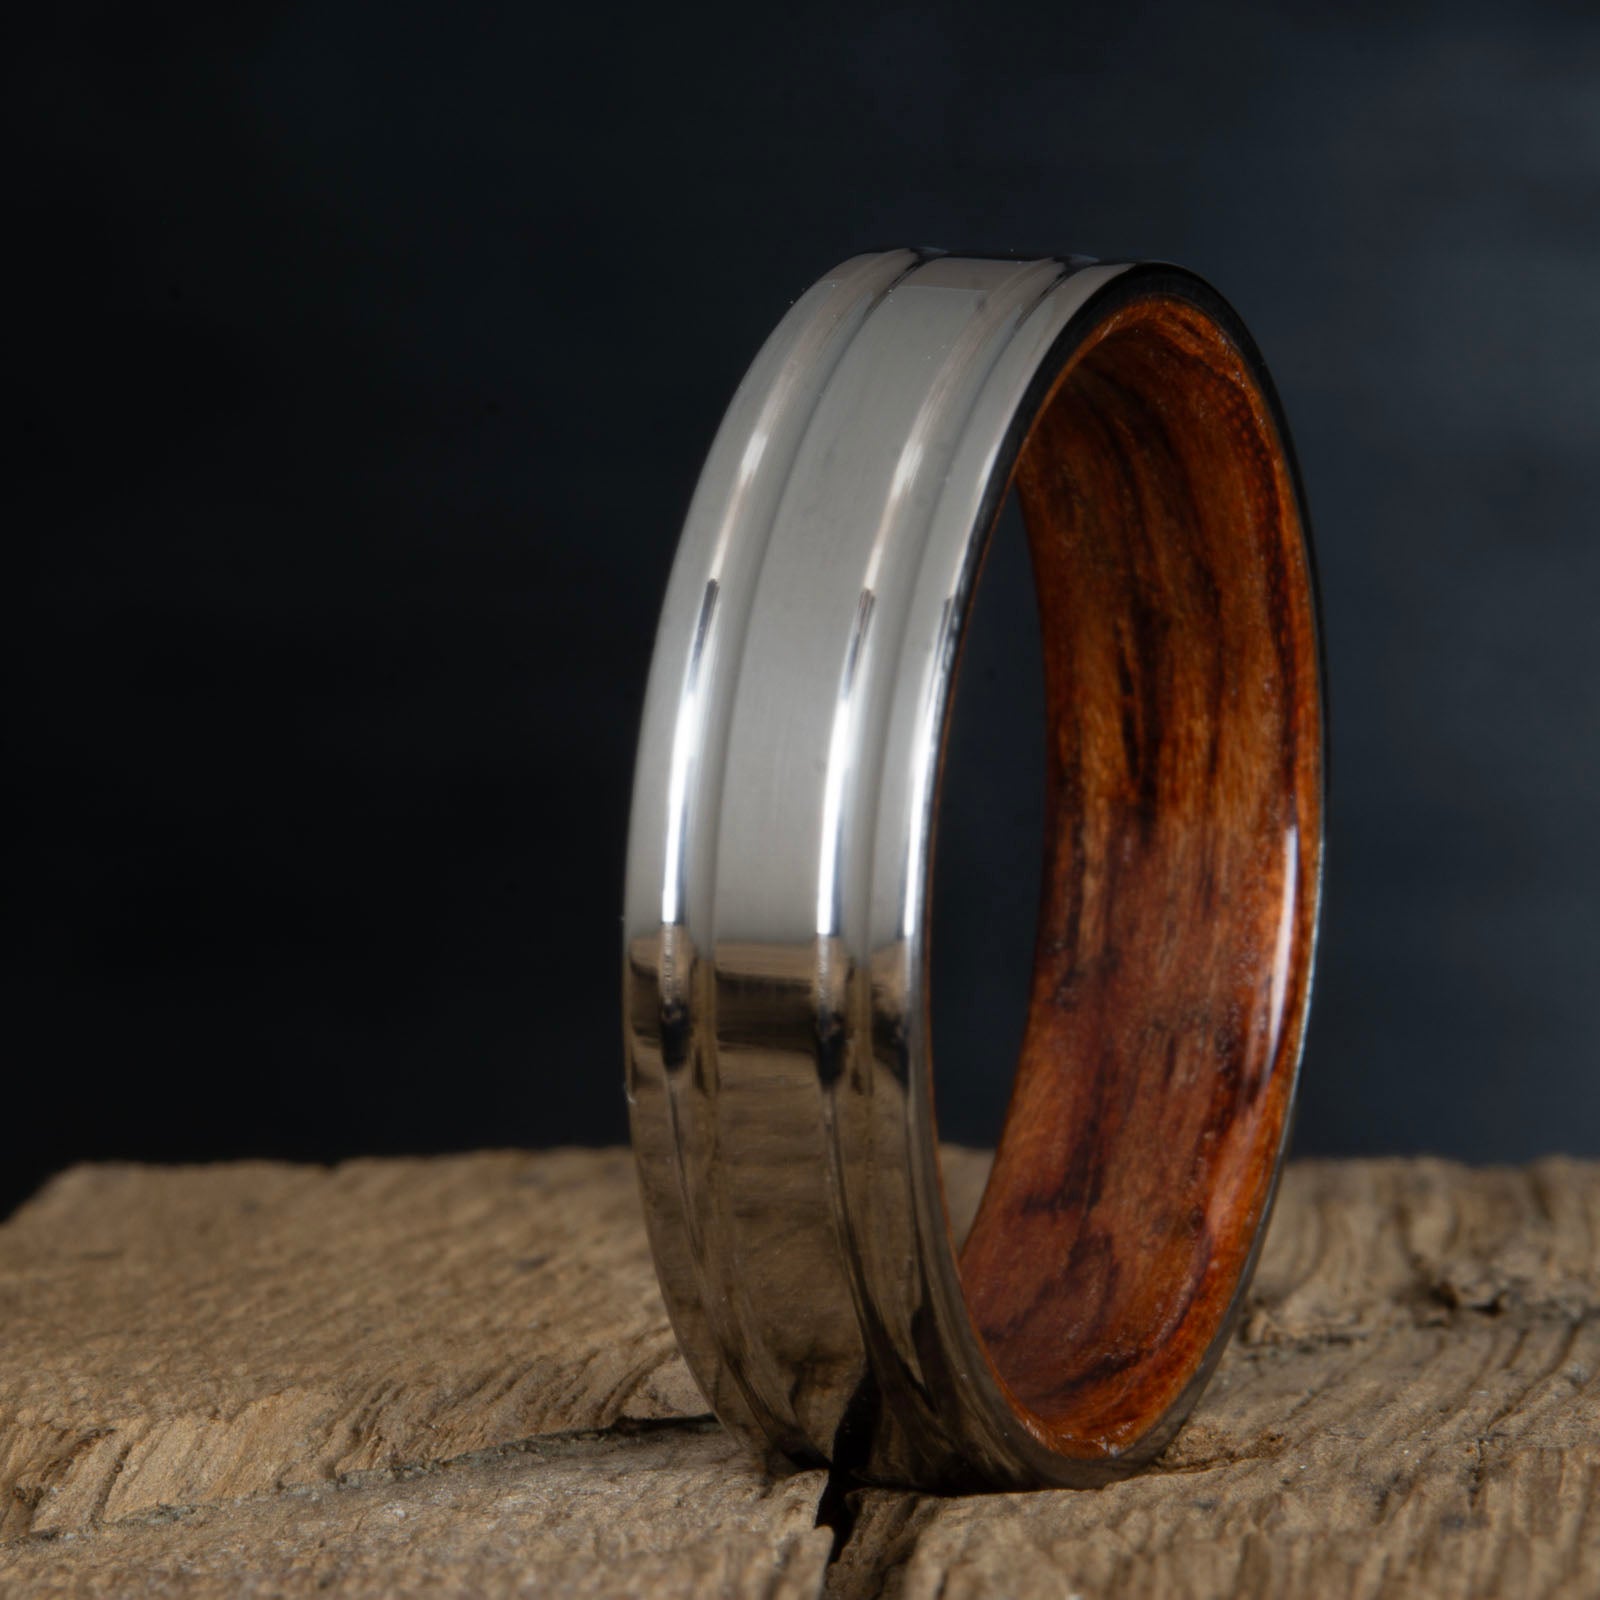 titanium and bubinga wood ring- double groove polished titanium wood ring with bubinga